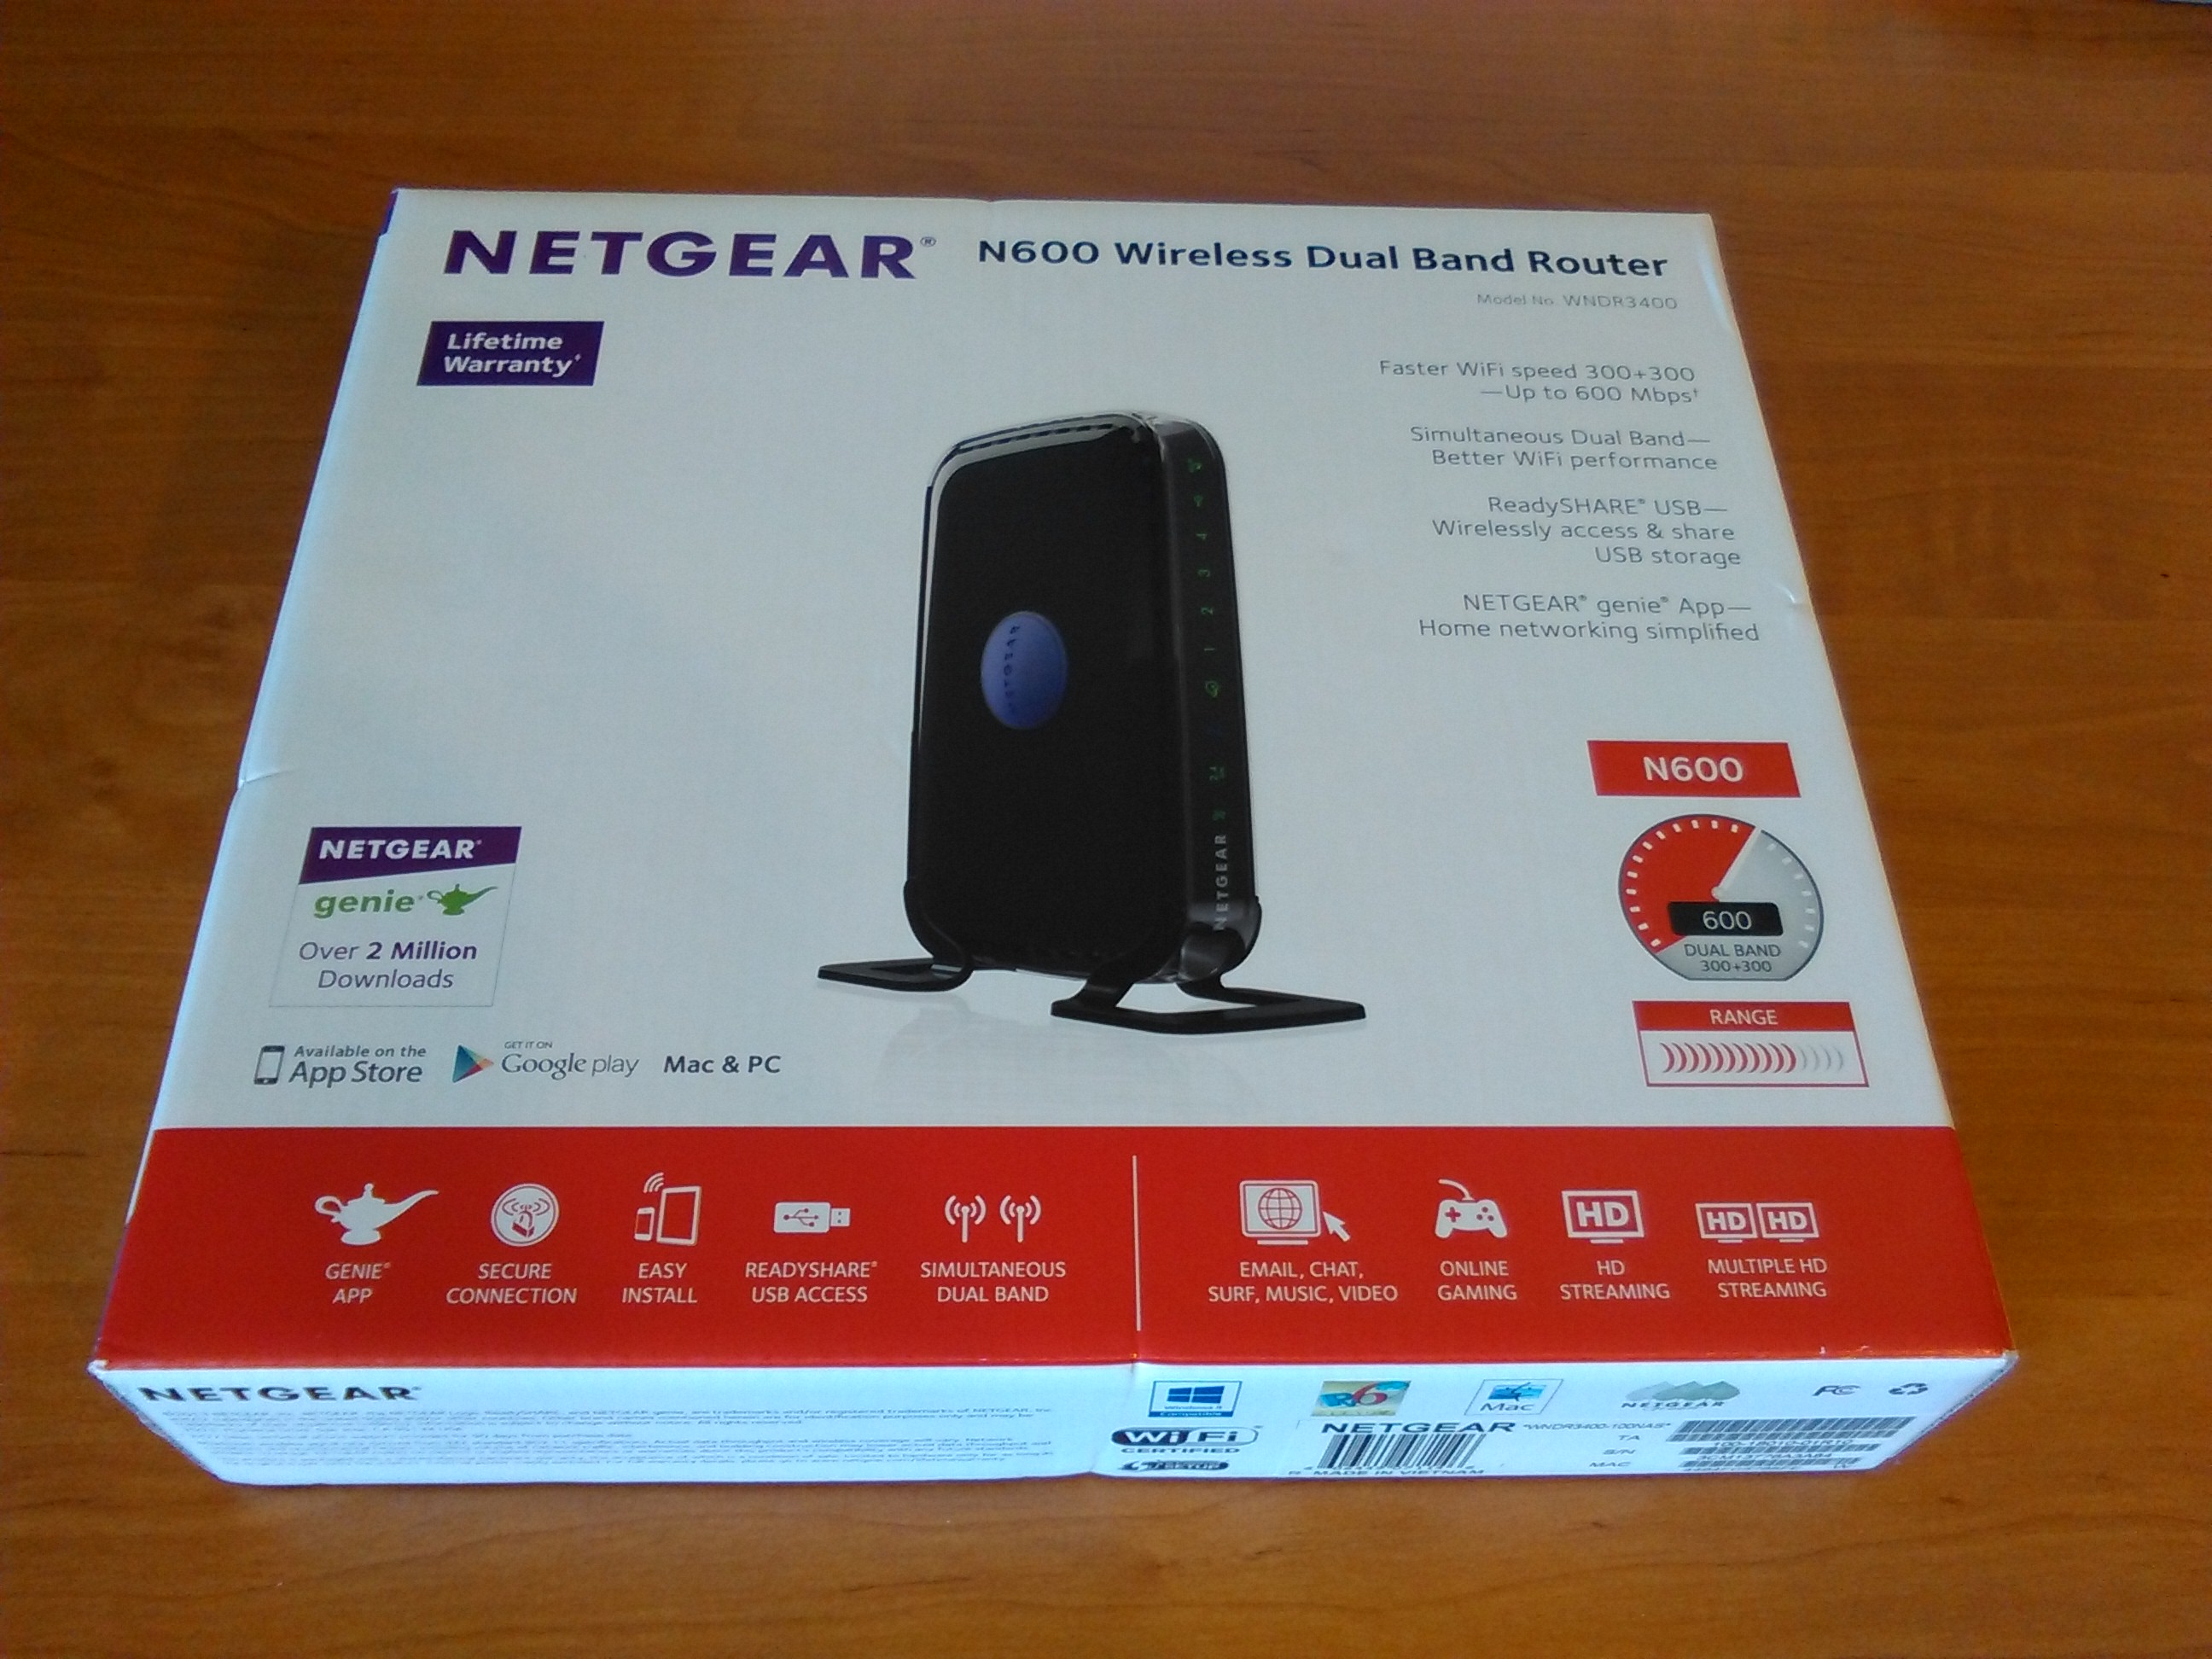 New Netgear N600 wireless dual band router, $40